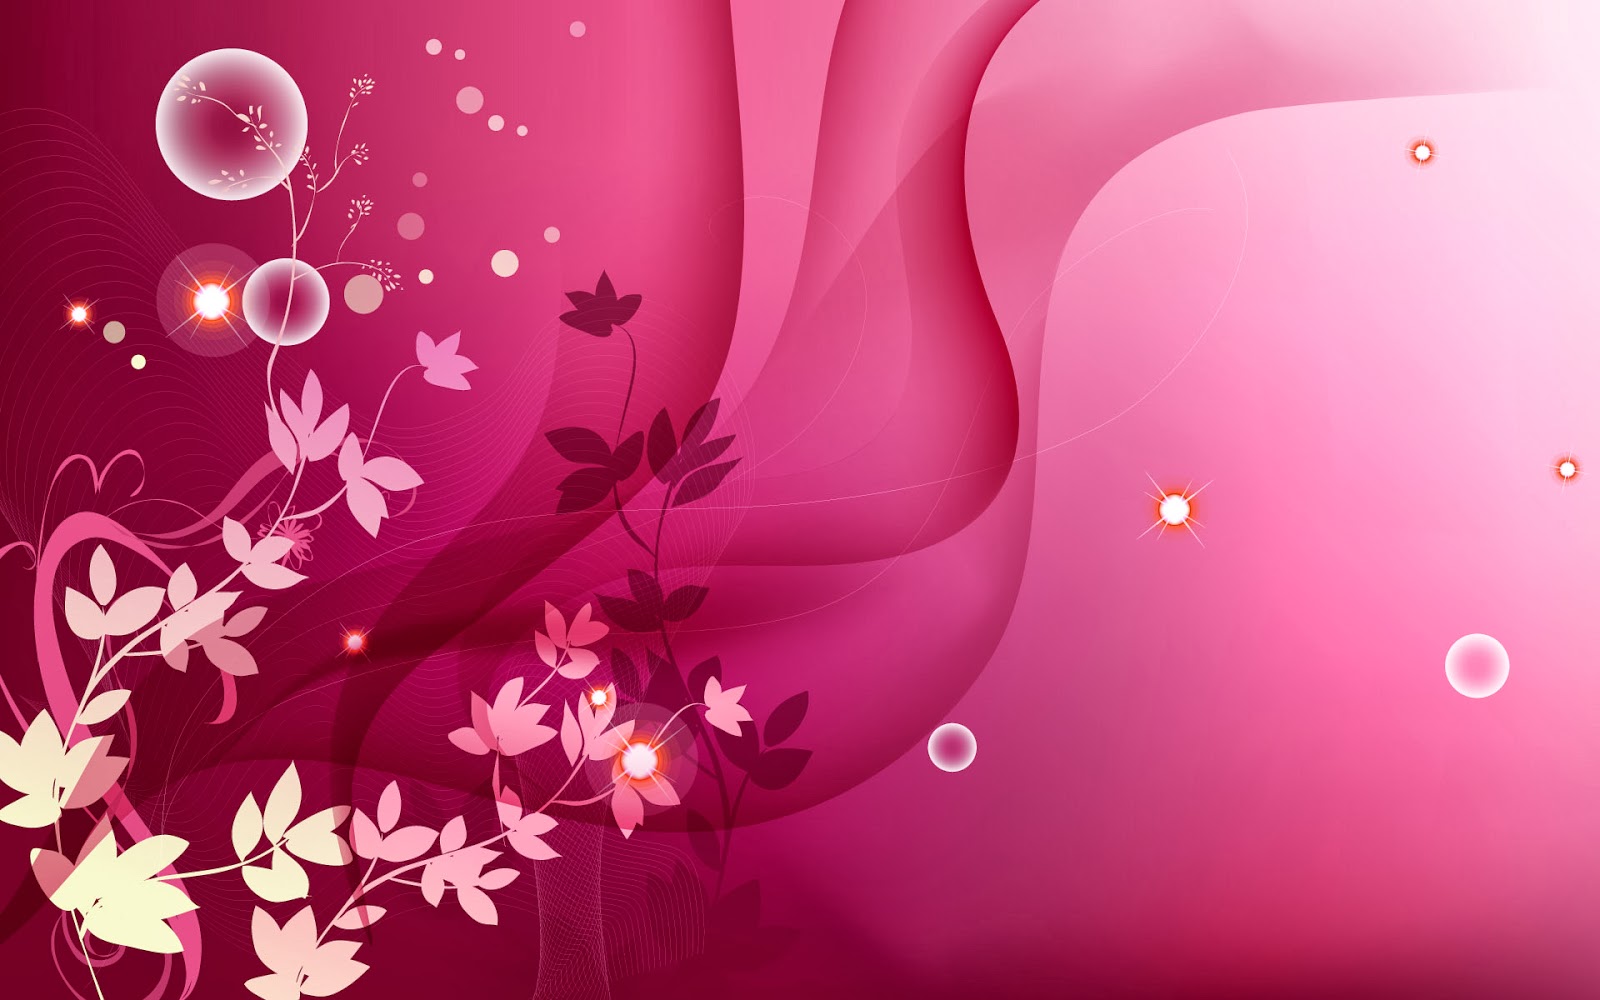 gambar wallpaper liebe,rosa,lila,hintergrund,blütenblatt,grafikdesign